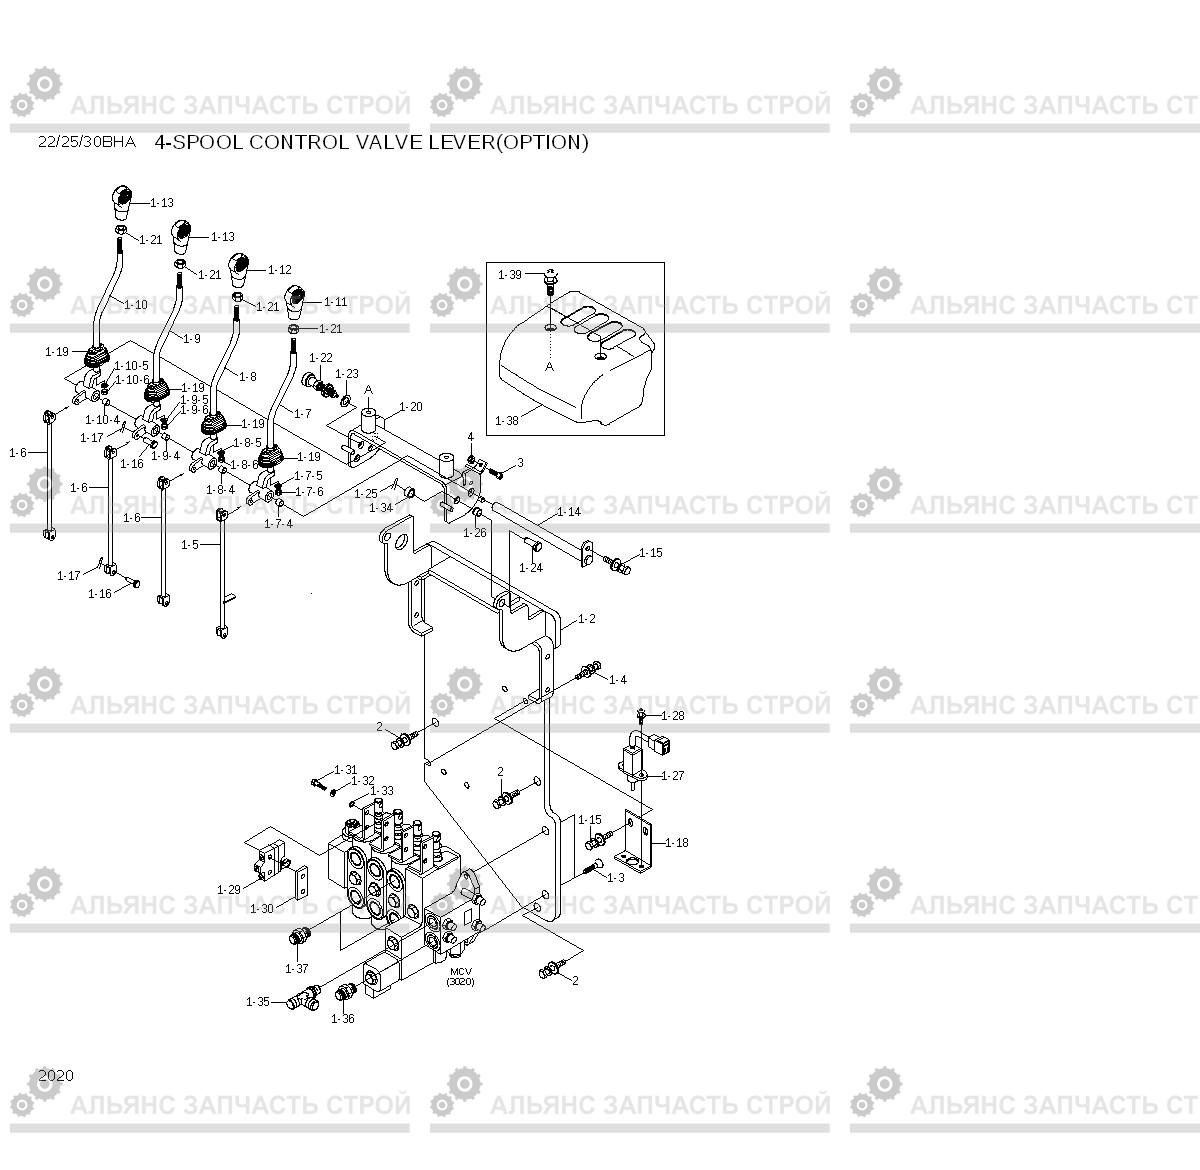 2020 4-SPOOL CONTROL VALVE LEVER(OPTION) 22/25/30BHA-7, Hyundai